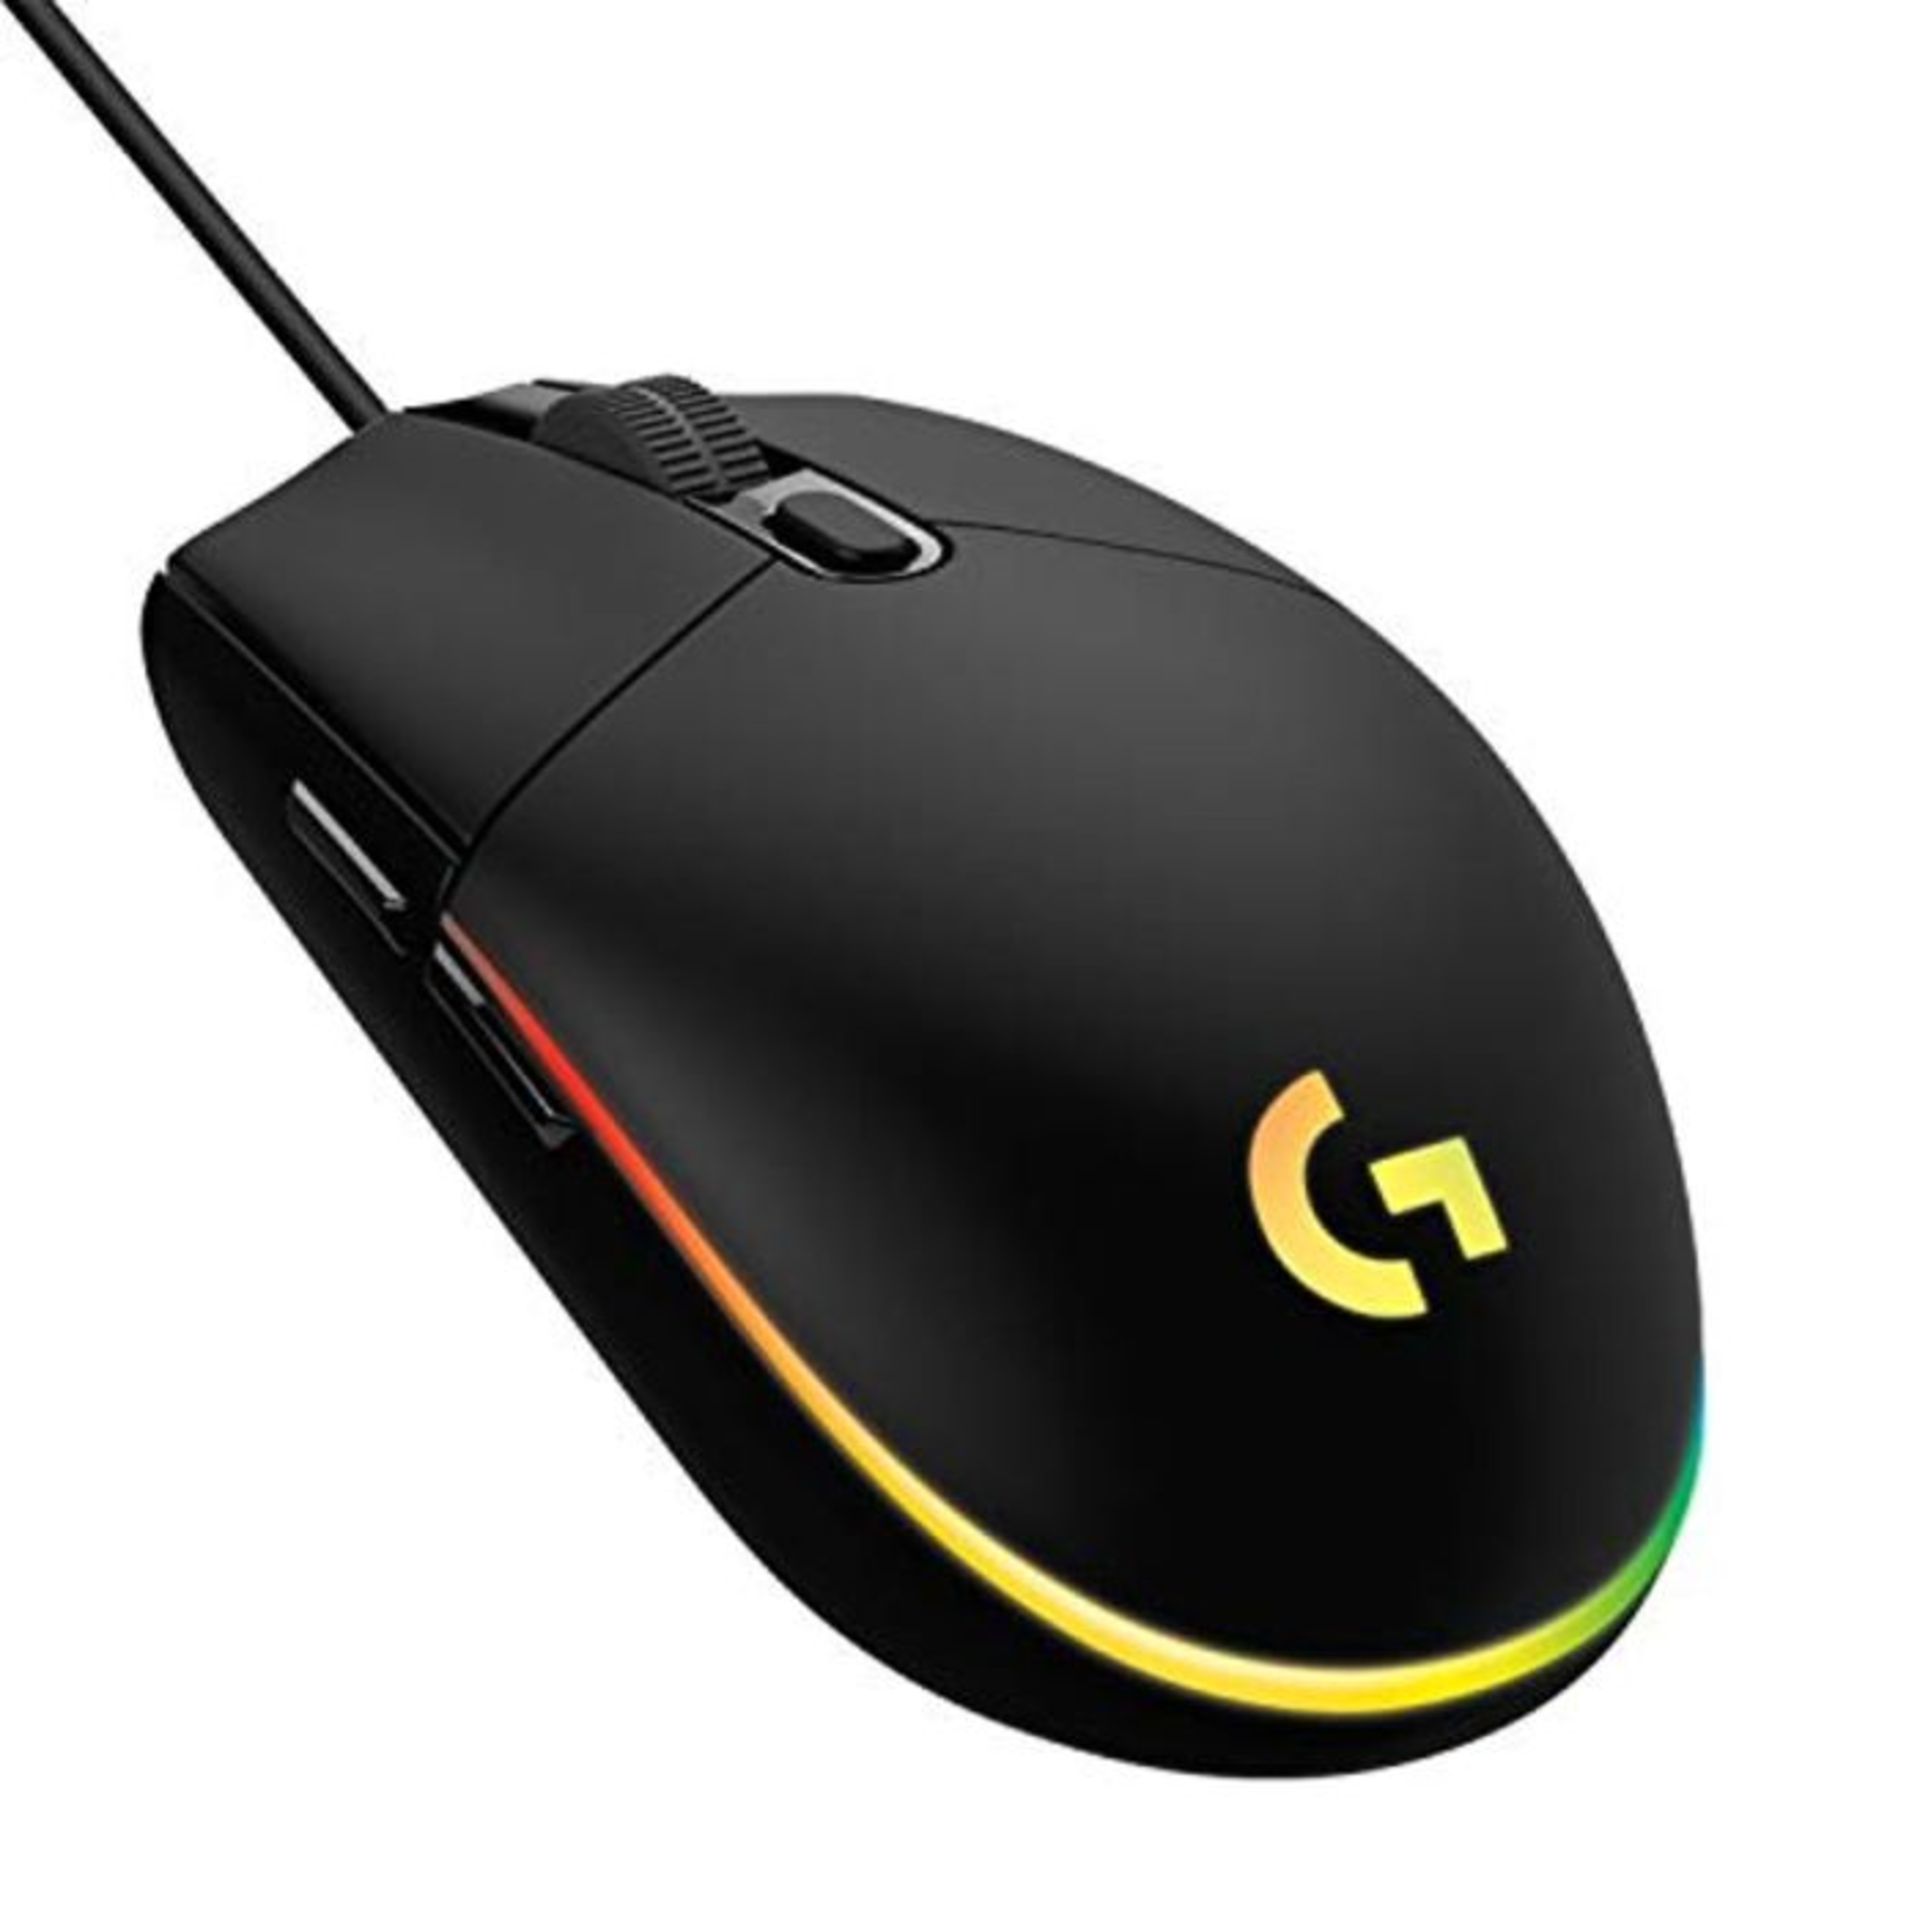 Logitech G203 Lightsync Gaming Mouse with Customizable RGB Lighting, 6 Programmable Bu